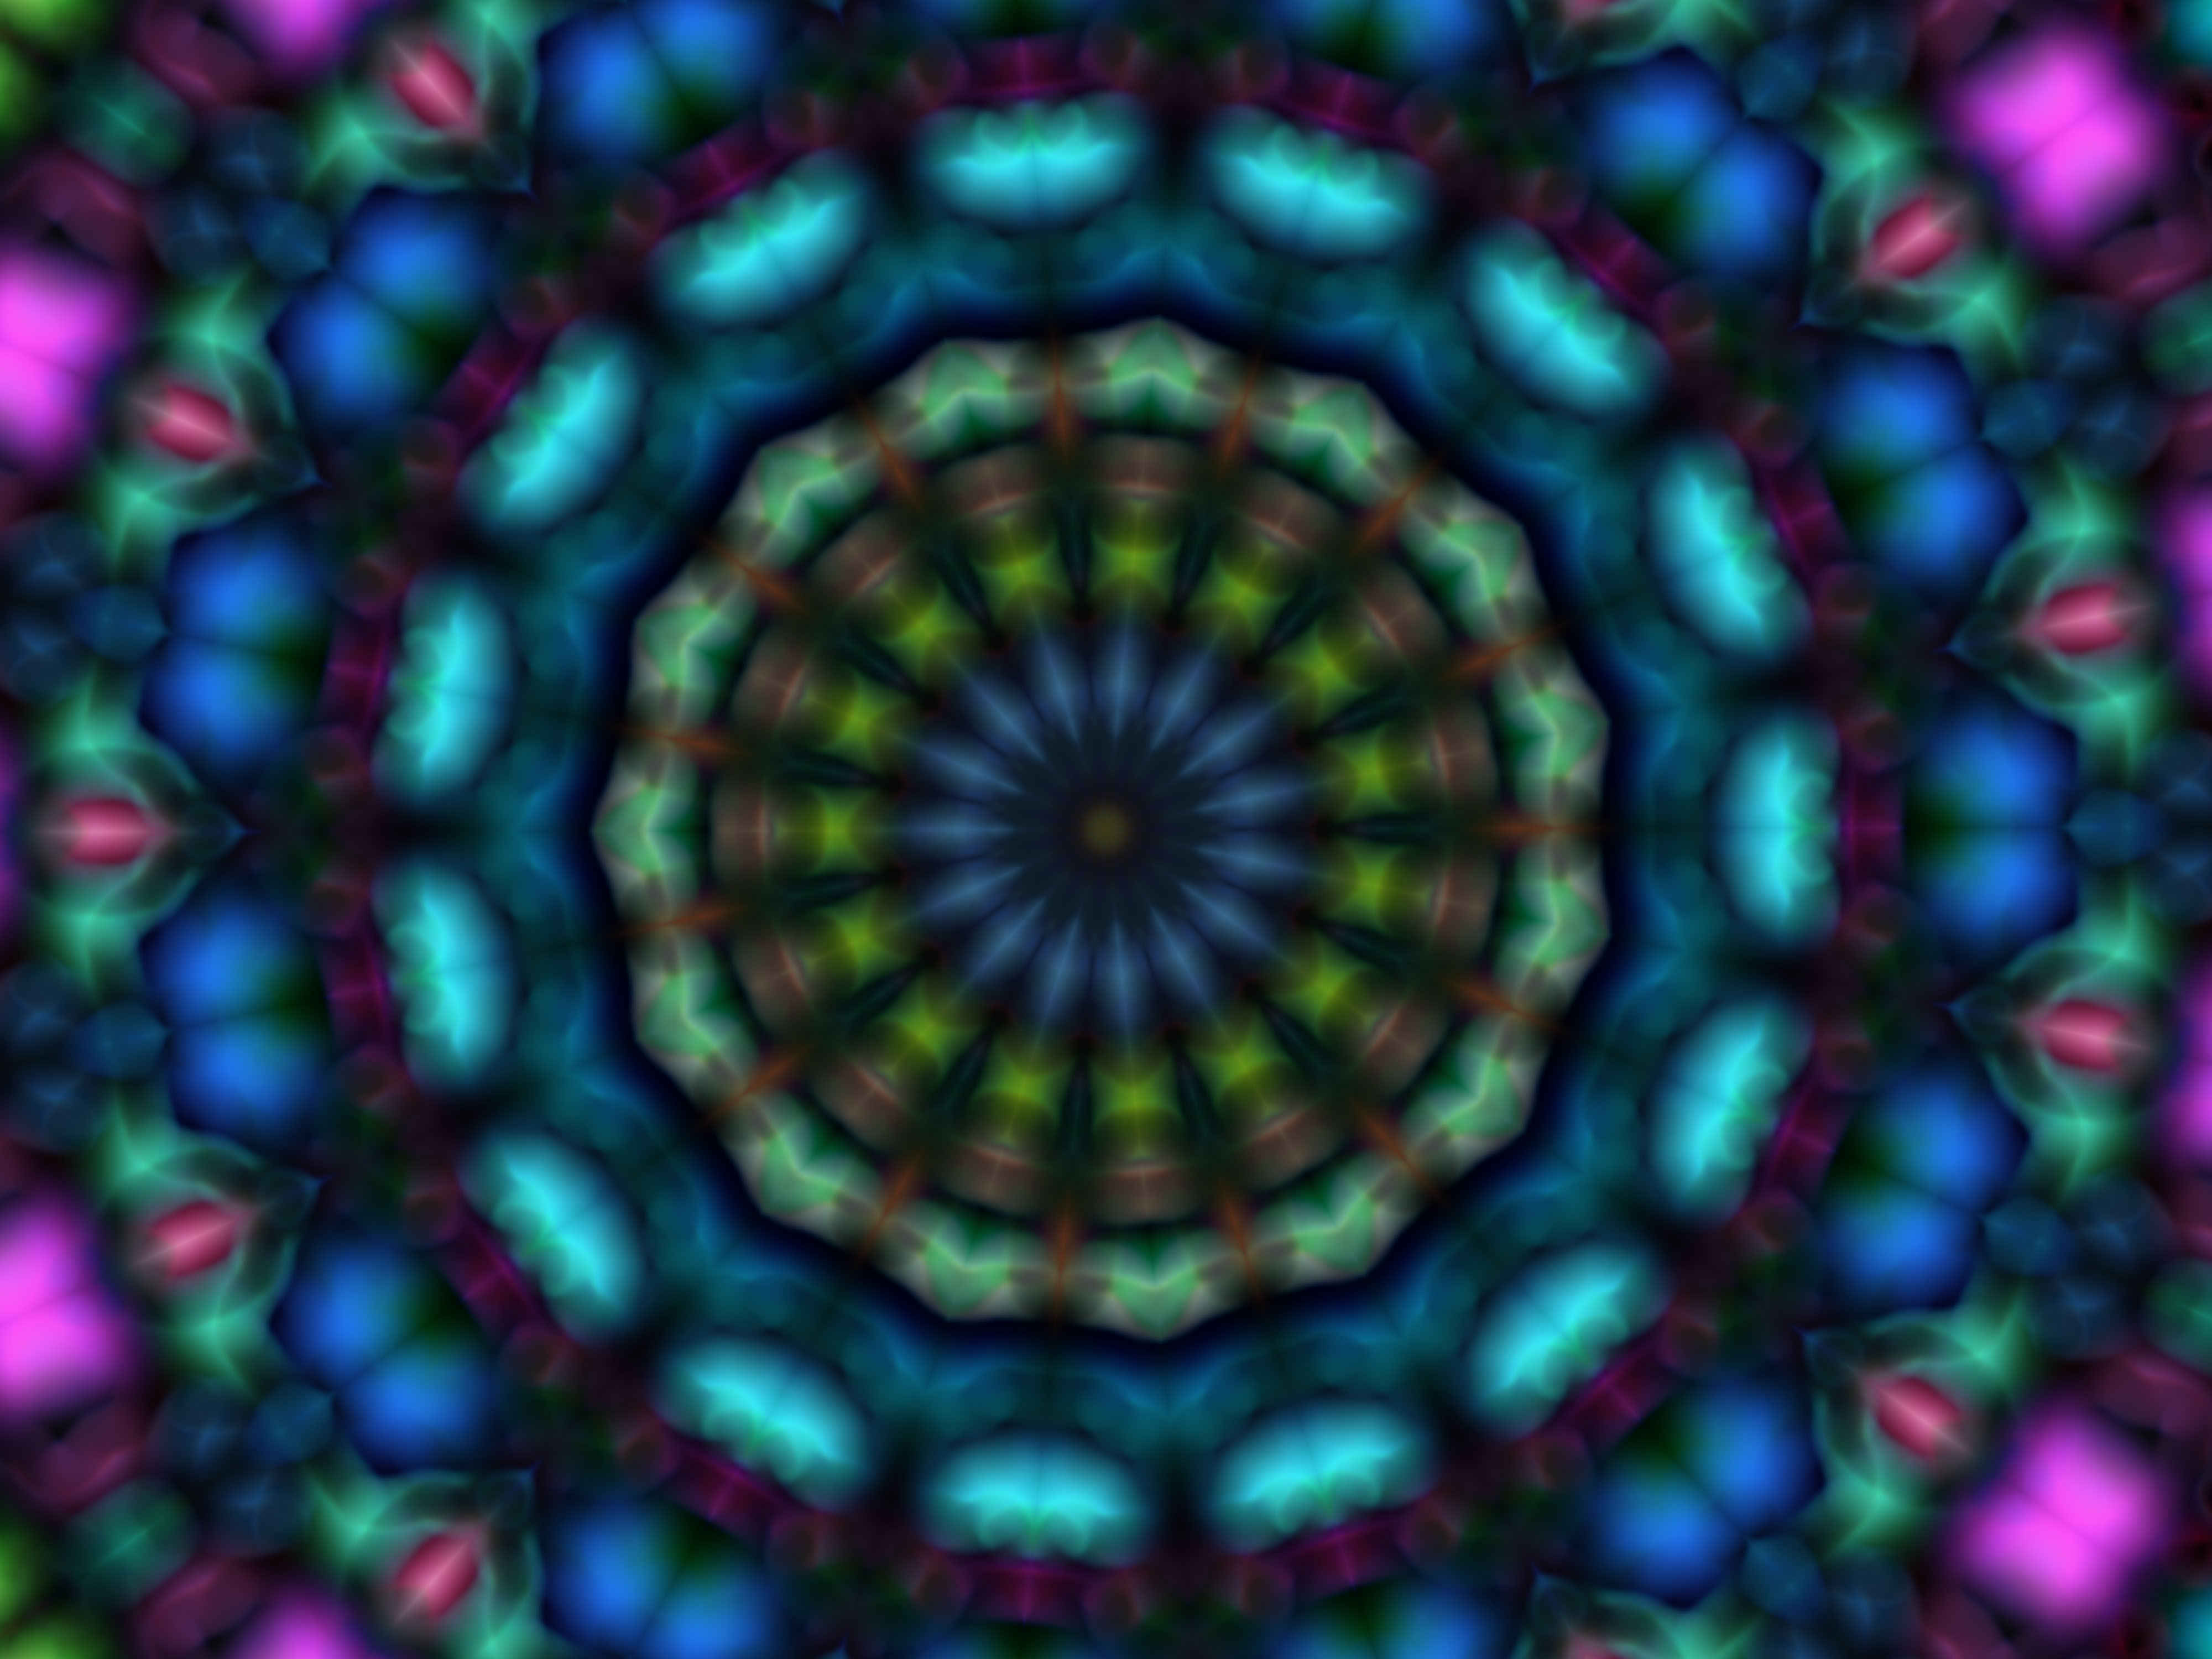 Kaleidoscope Art by Susanlu4esm